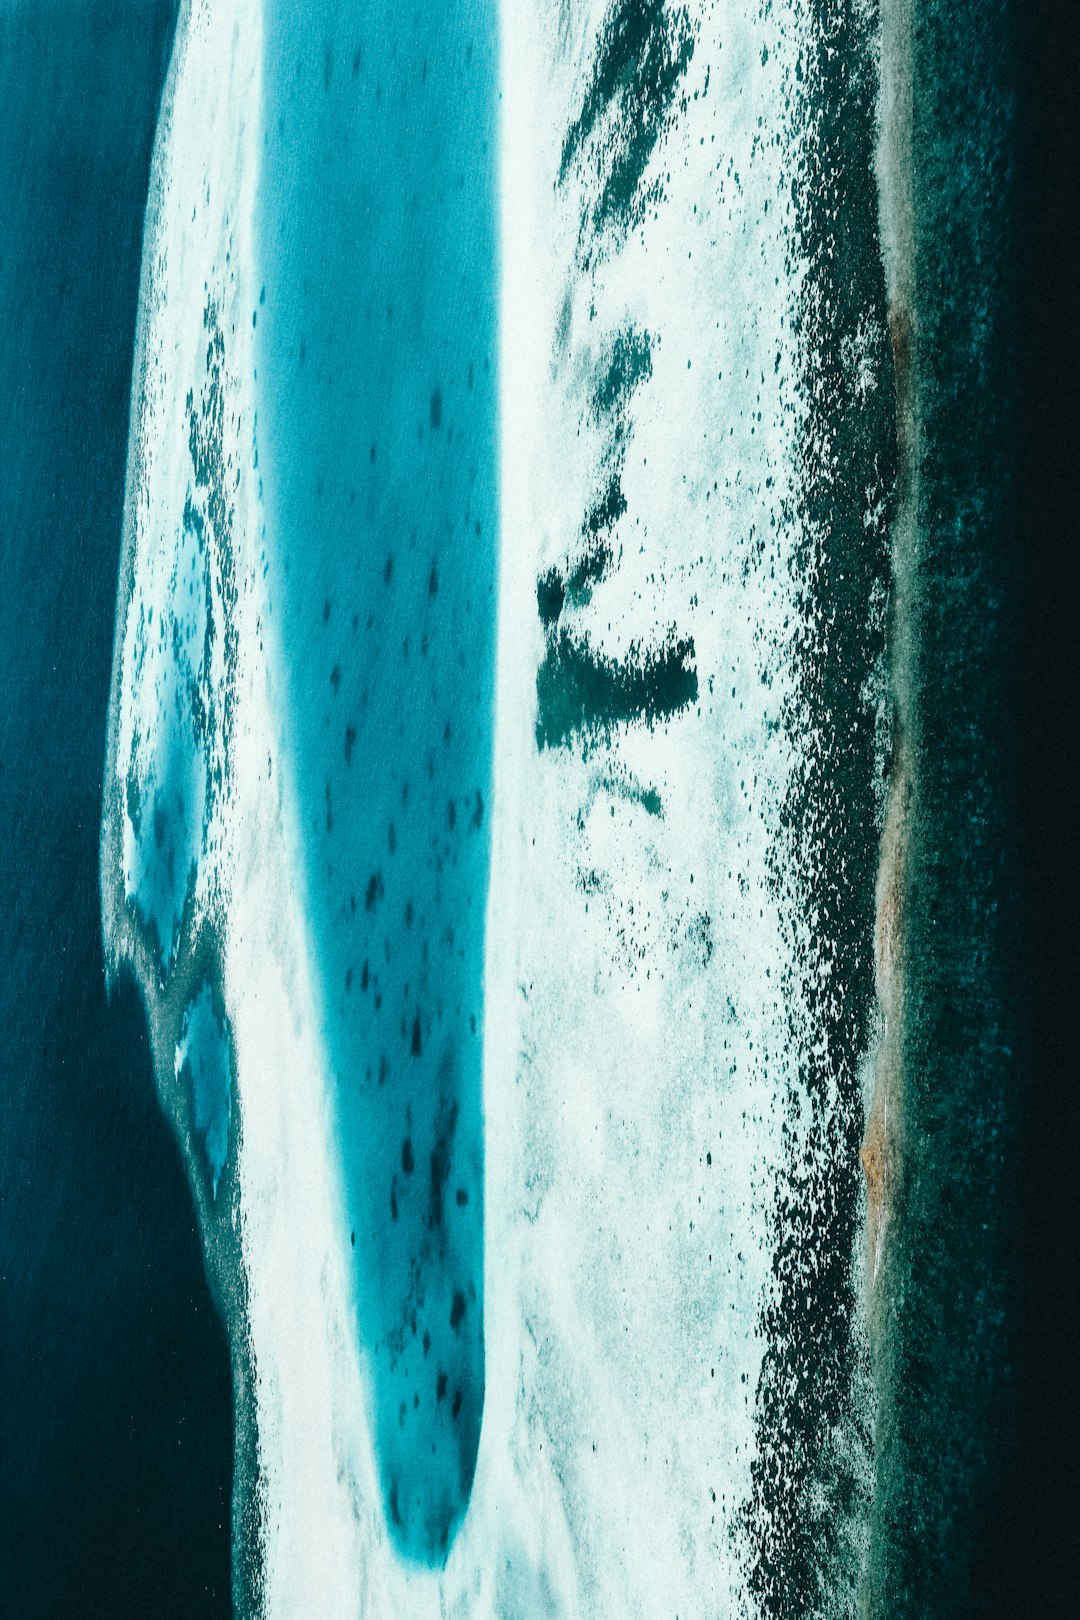 Underwater photo spot Maldives Maldive Islands